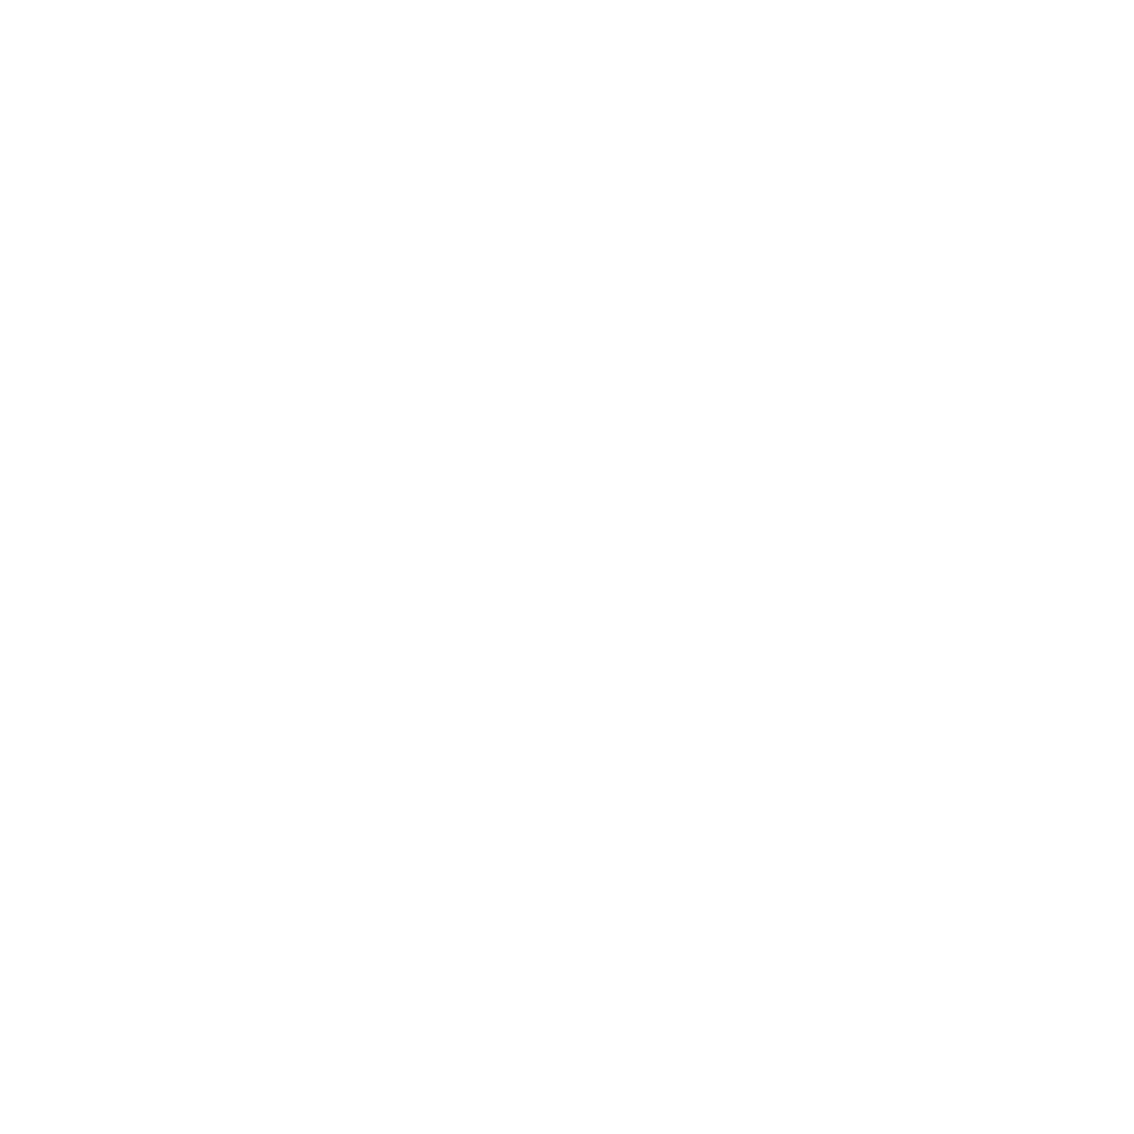 valmori 1963義大利家具品牌 義大利沙發 進口沙發